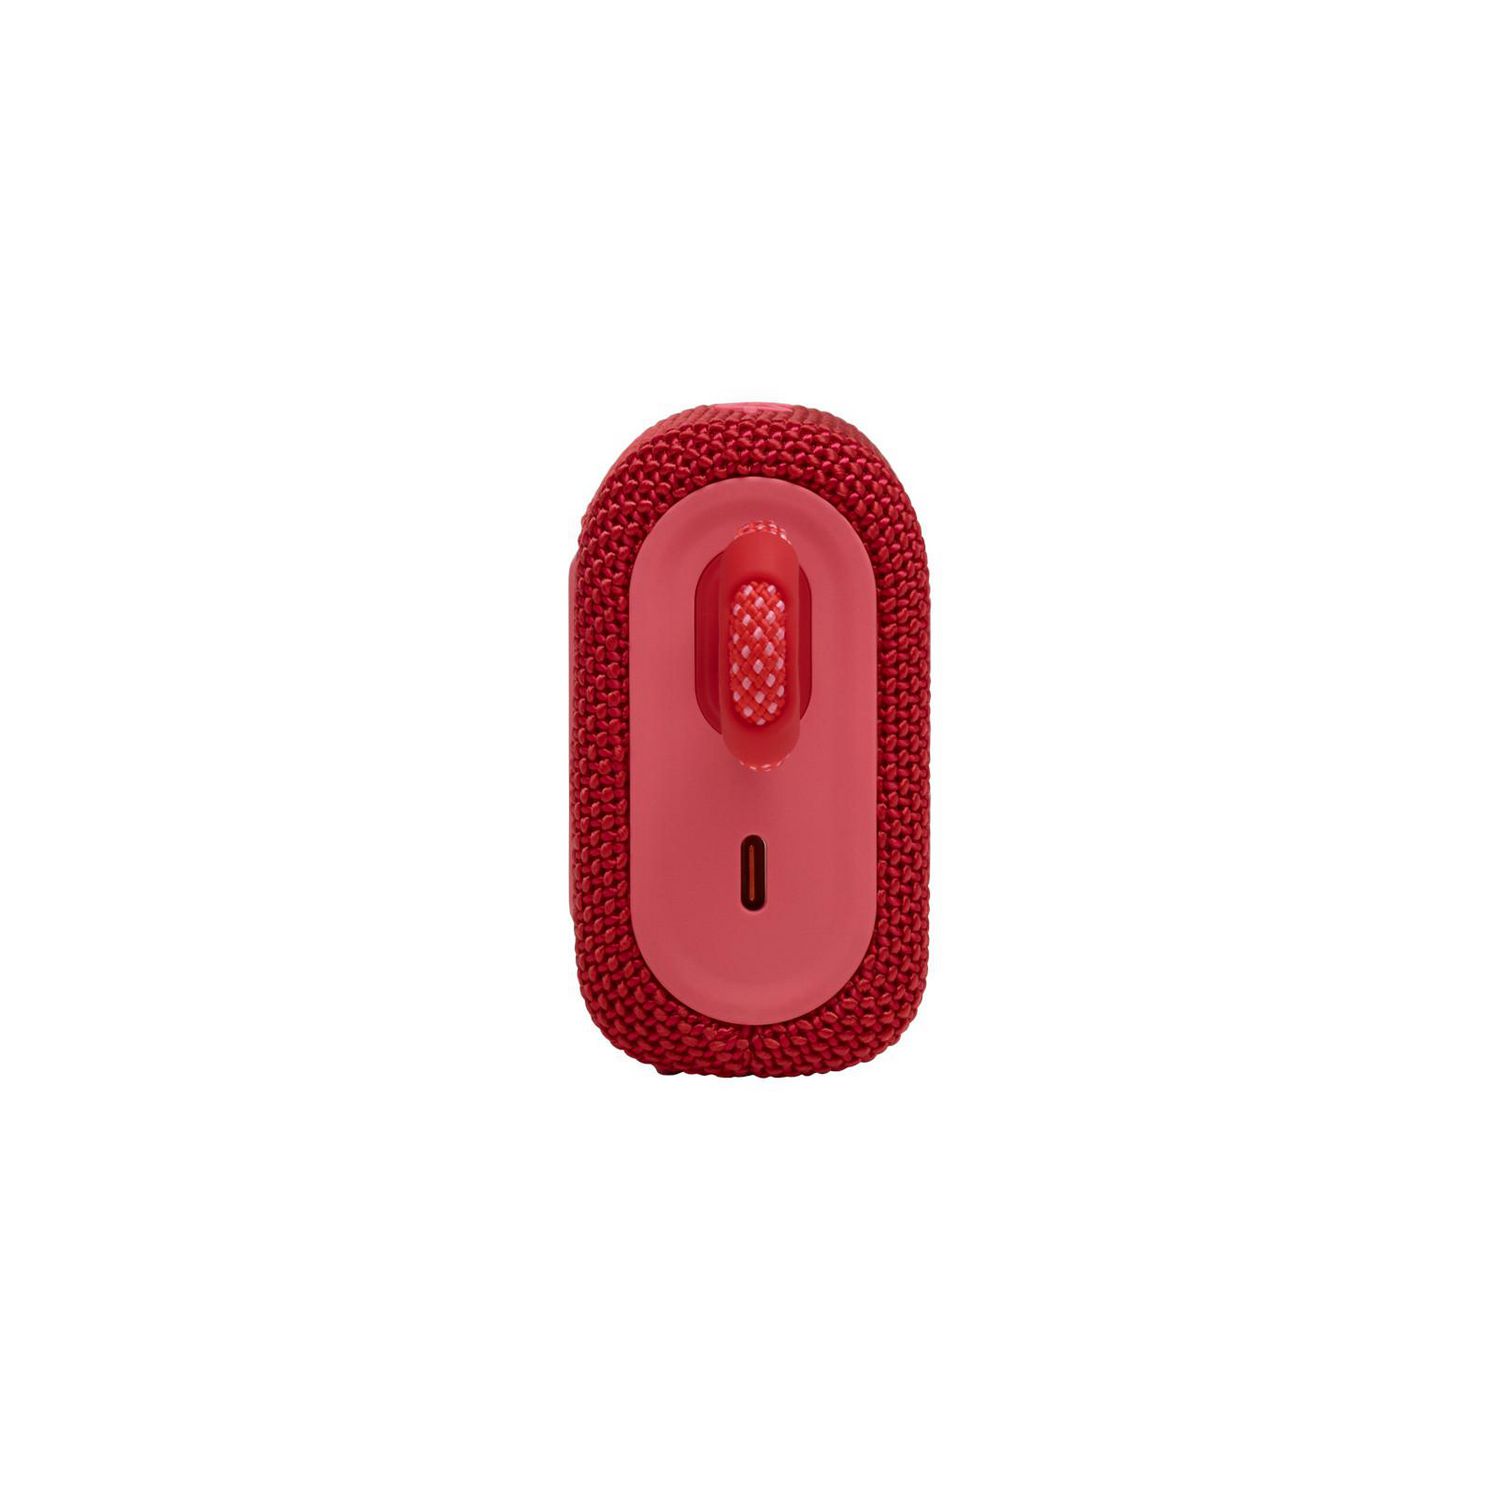 JBL Go 3 Portable Bluetooth Speaker (Black/Orange) — Assistive Tech